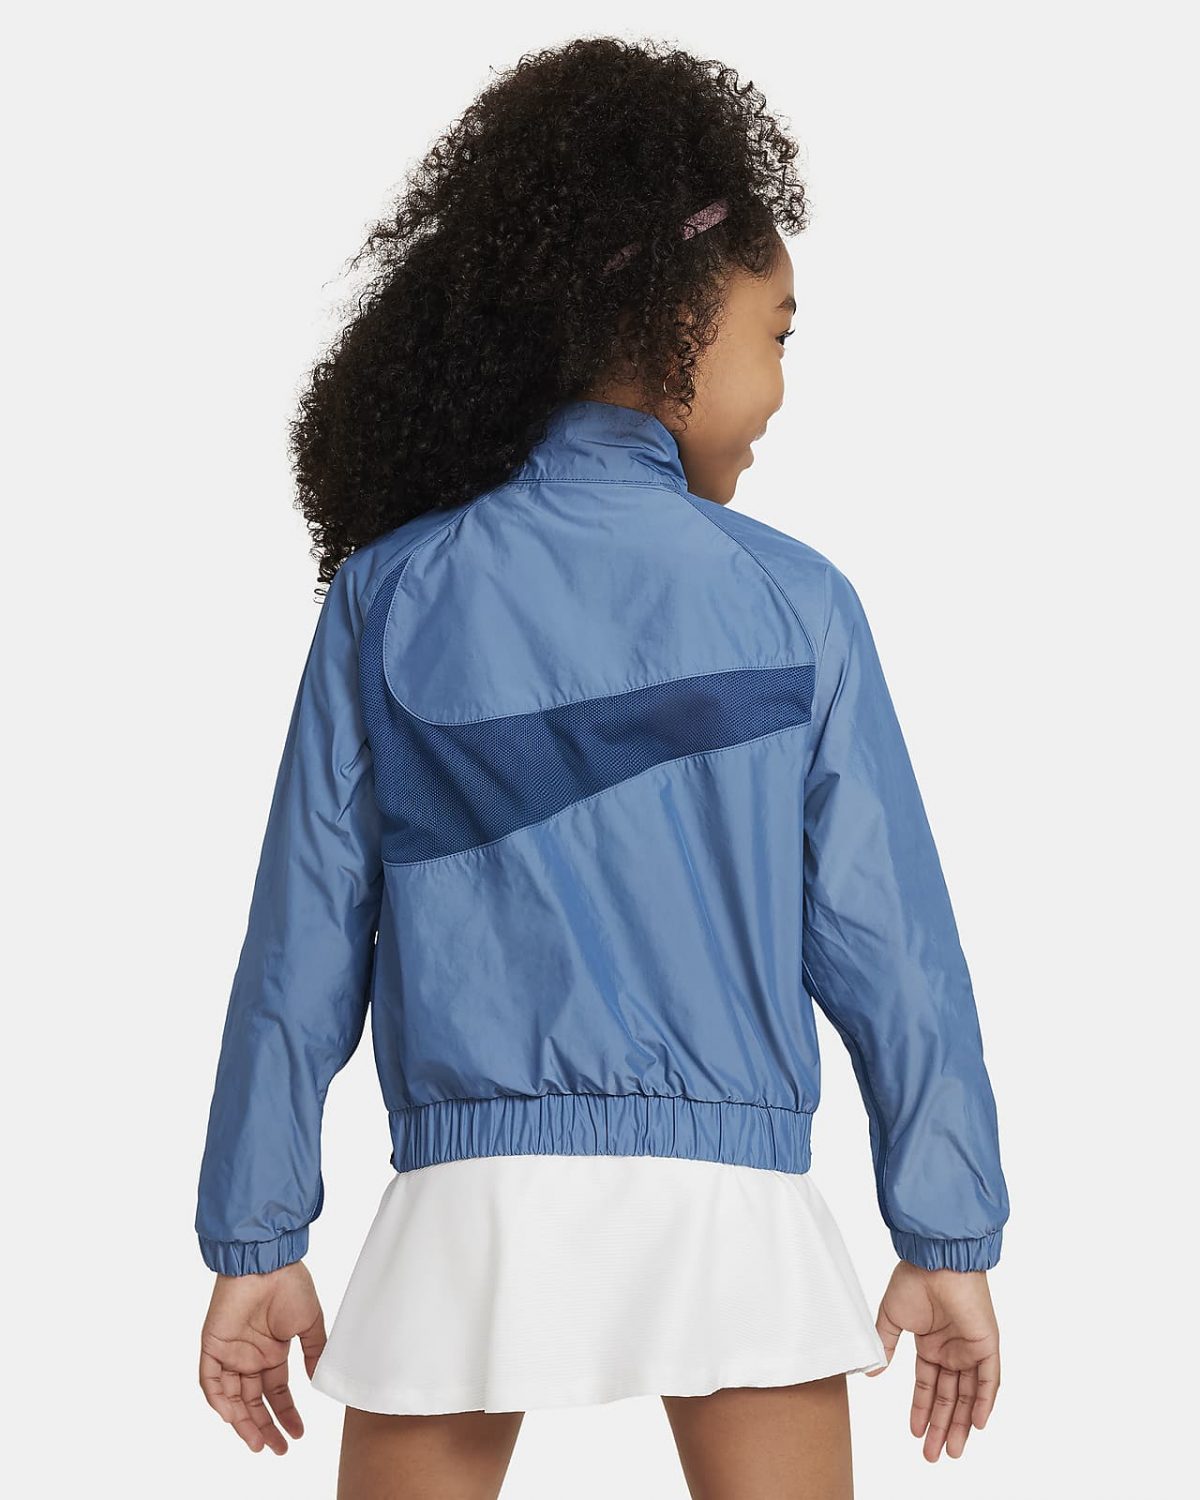 Детская куртка Nike Sportswear Windrunner фотография